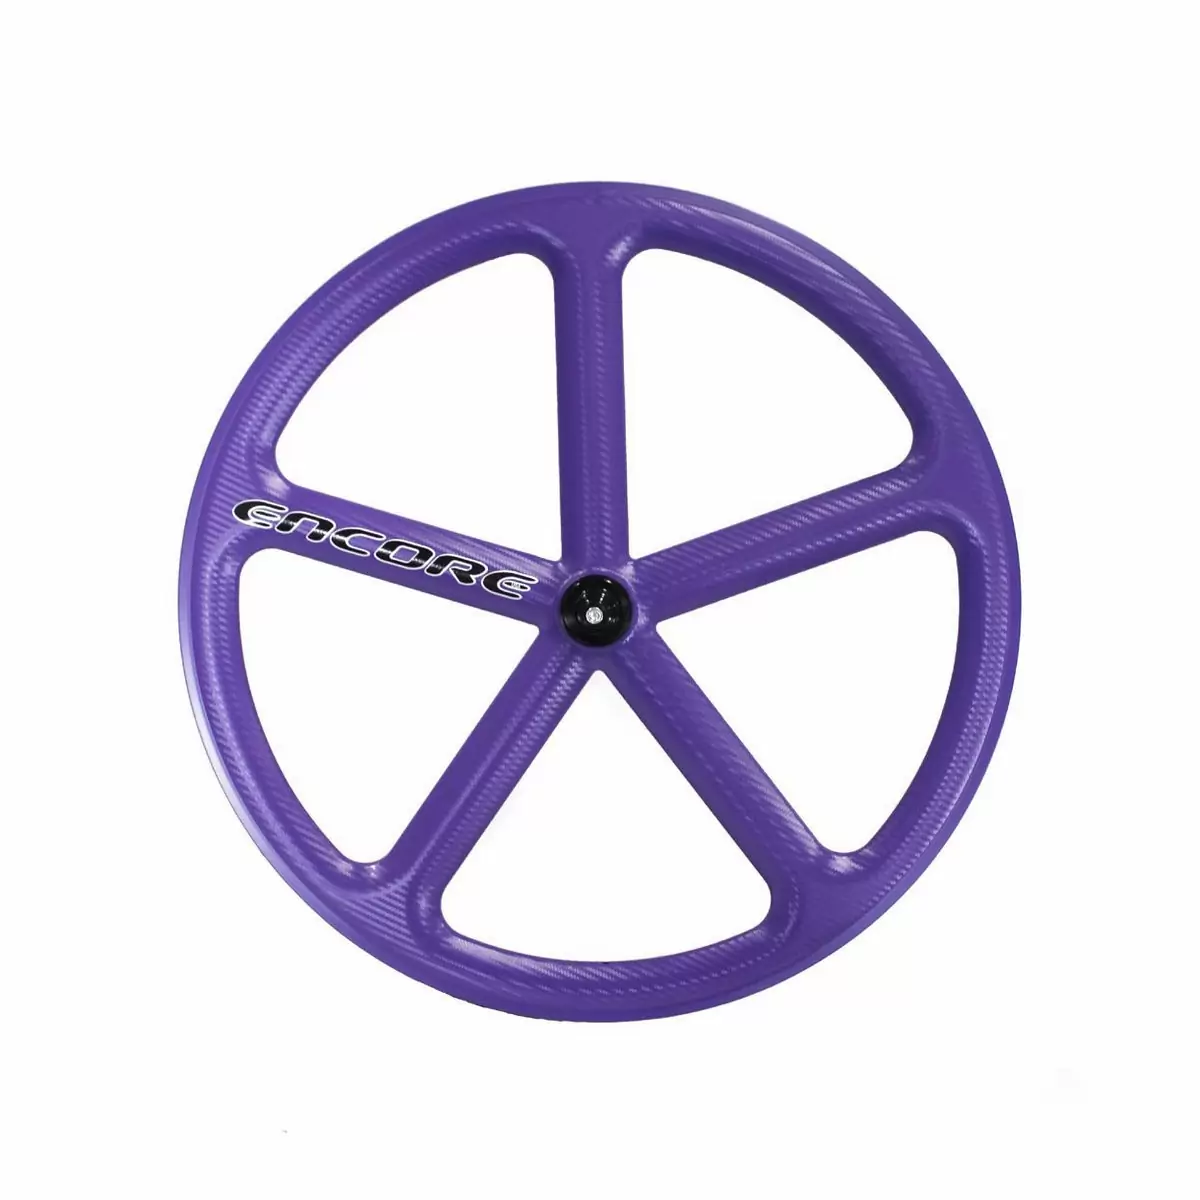 roue arrière 700c piste 5 rayons tissage carbone violet nmsw - image